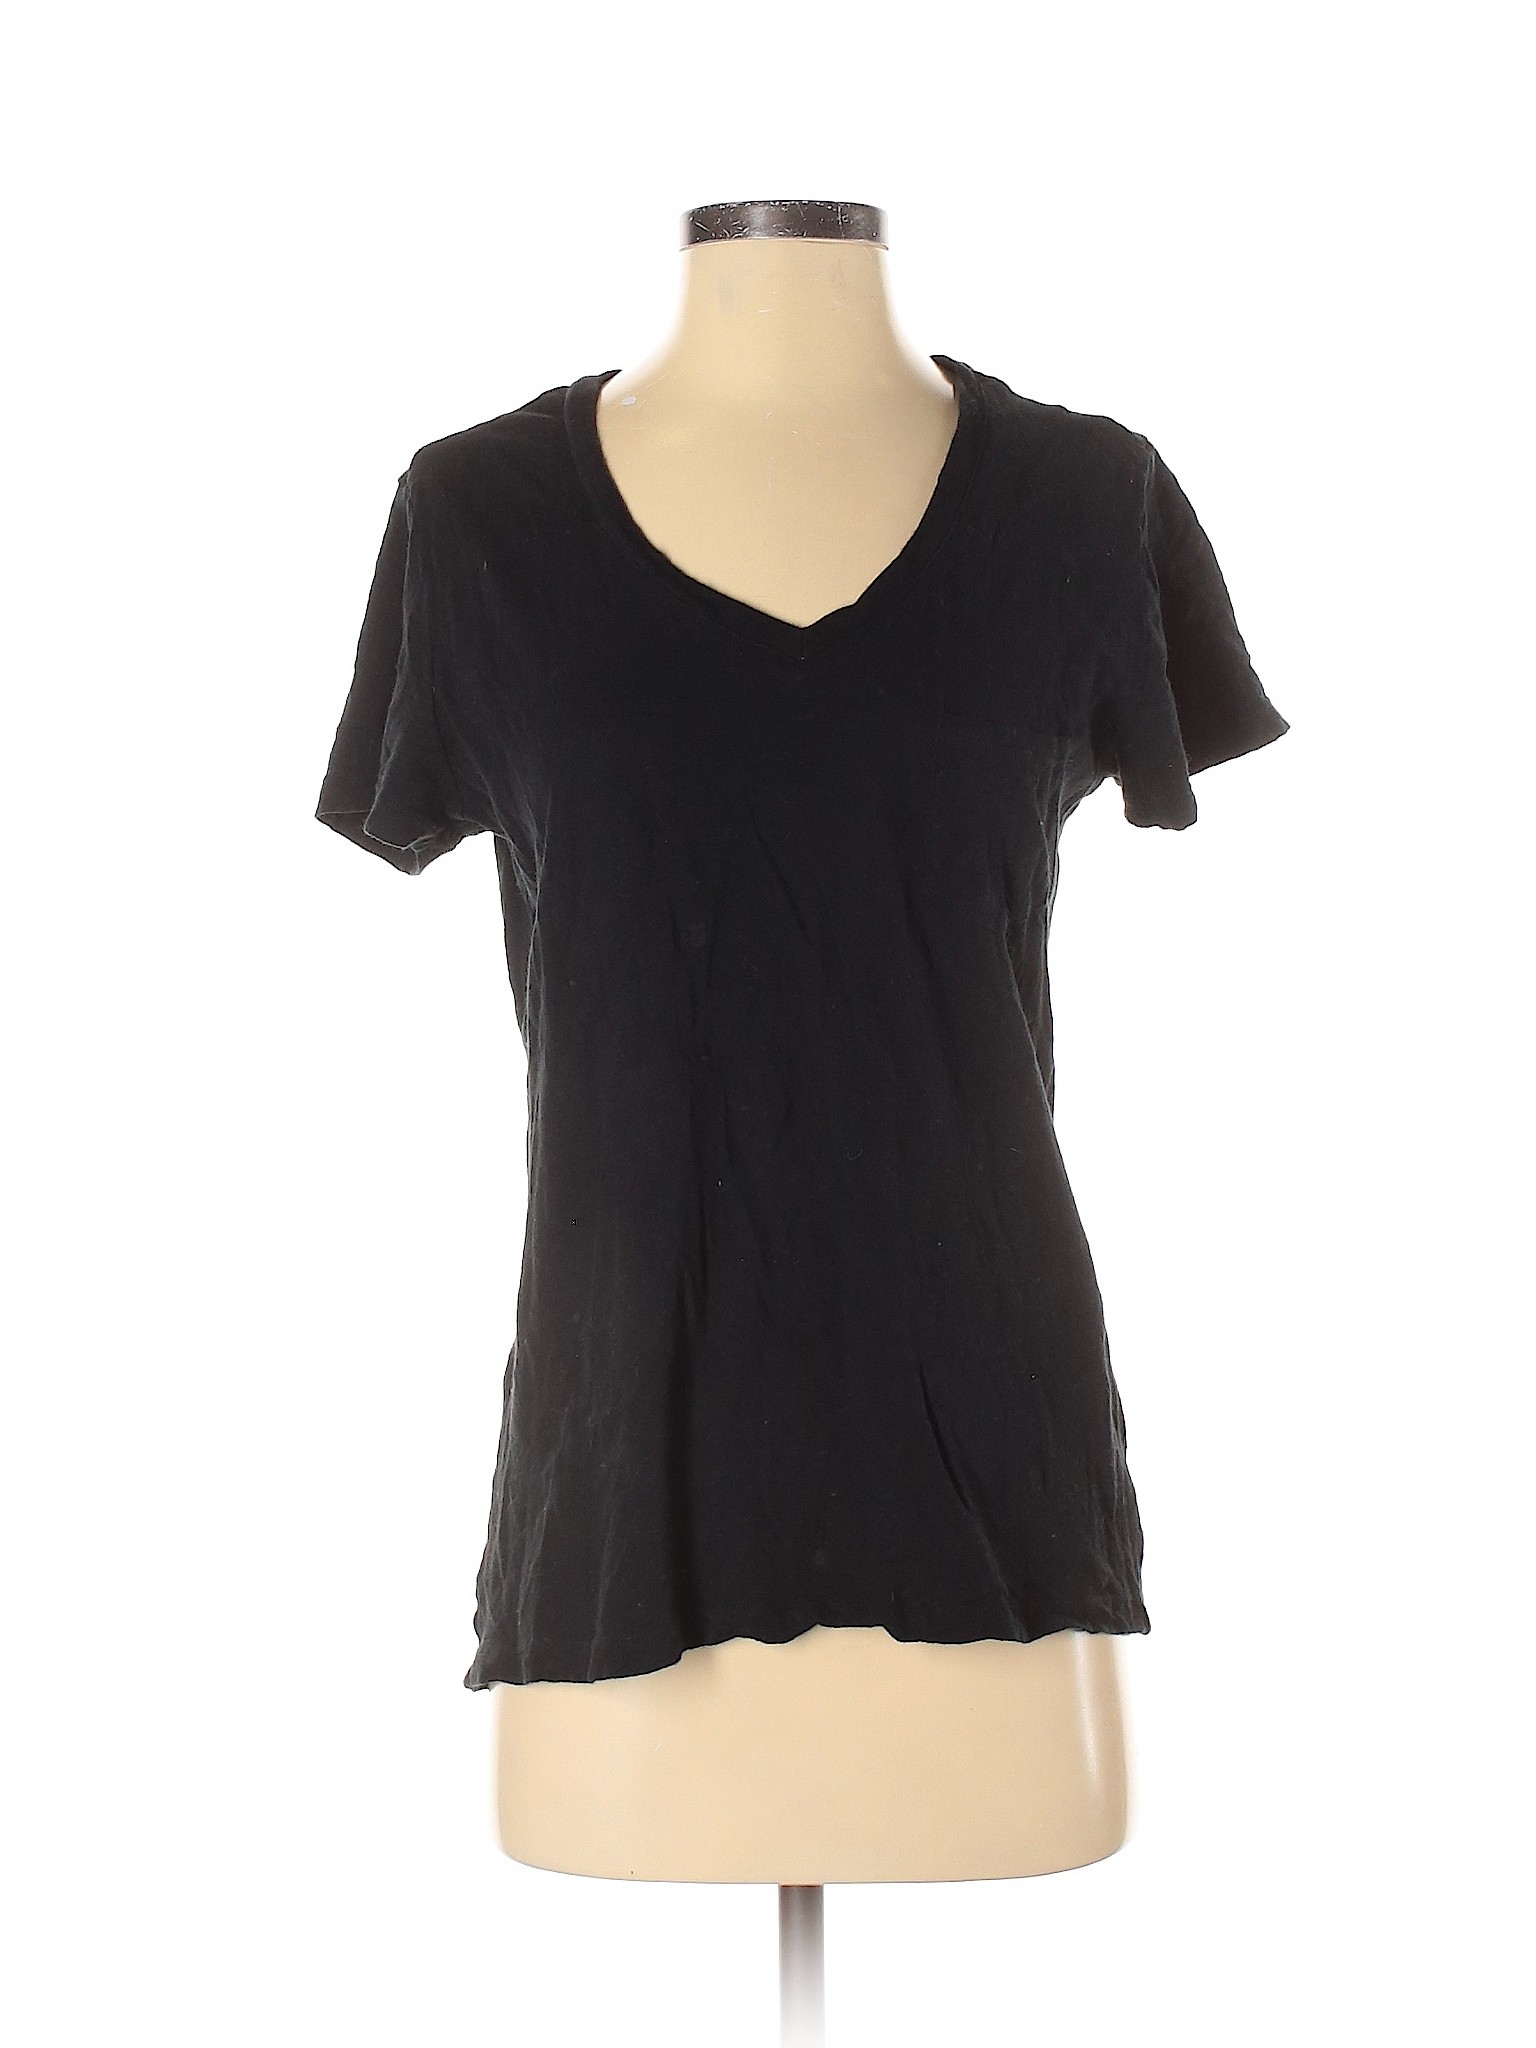 Universal Thread Women Black Short Sleeve T-Shirt S | eBay